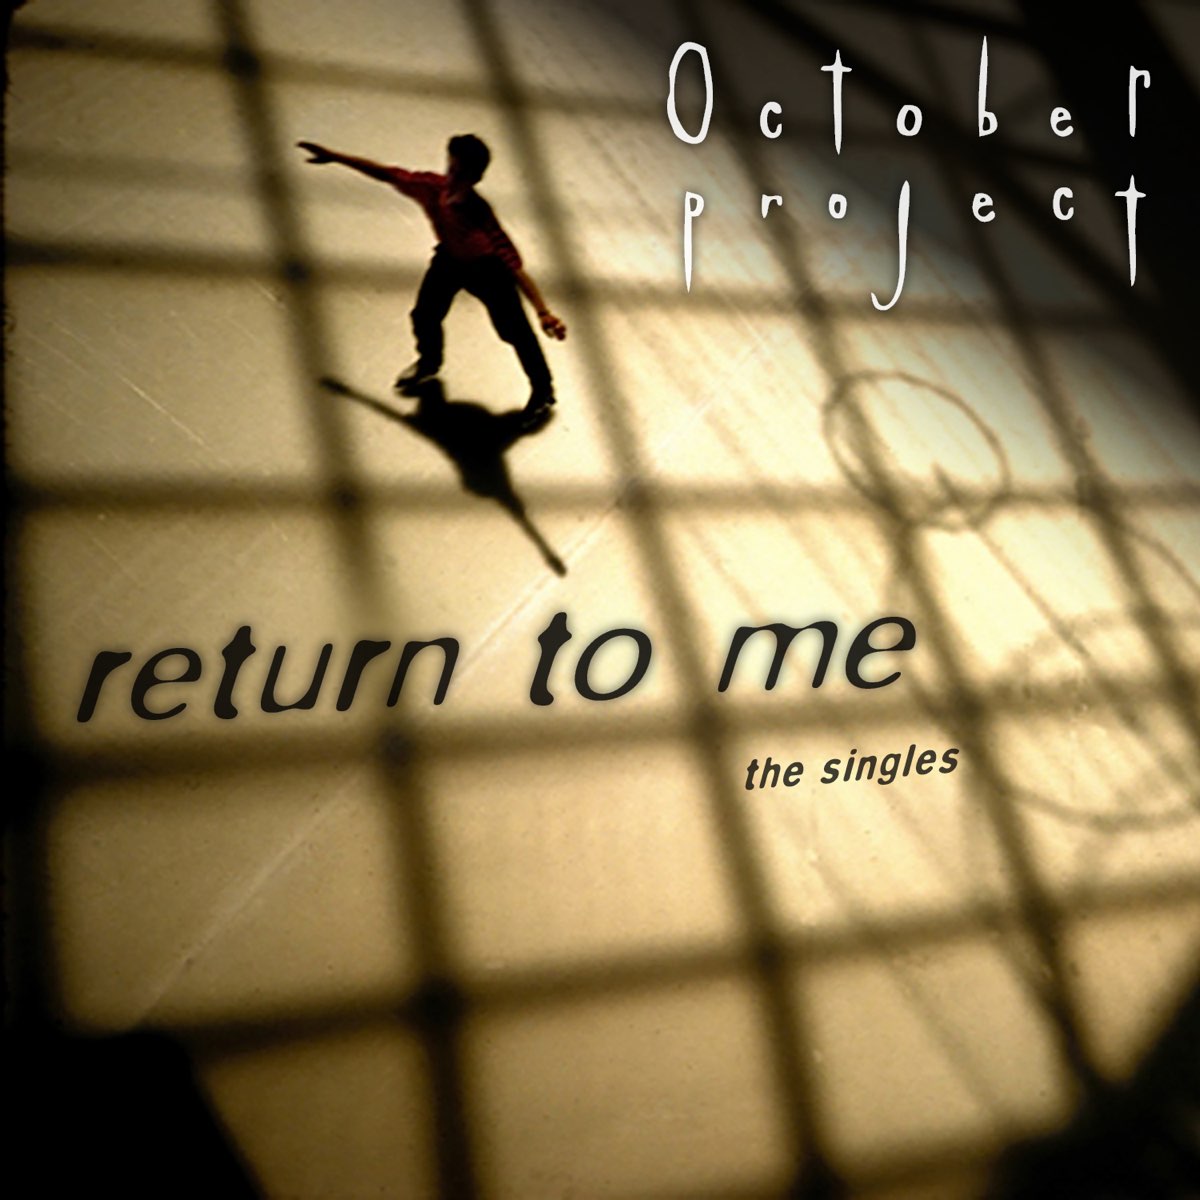 Return project. Return to me. Return в Музыке. October Project Band. Return to me песня.